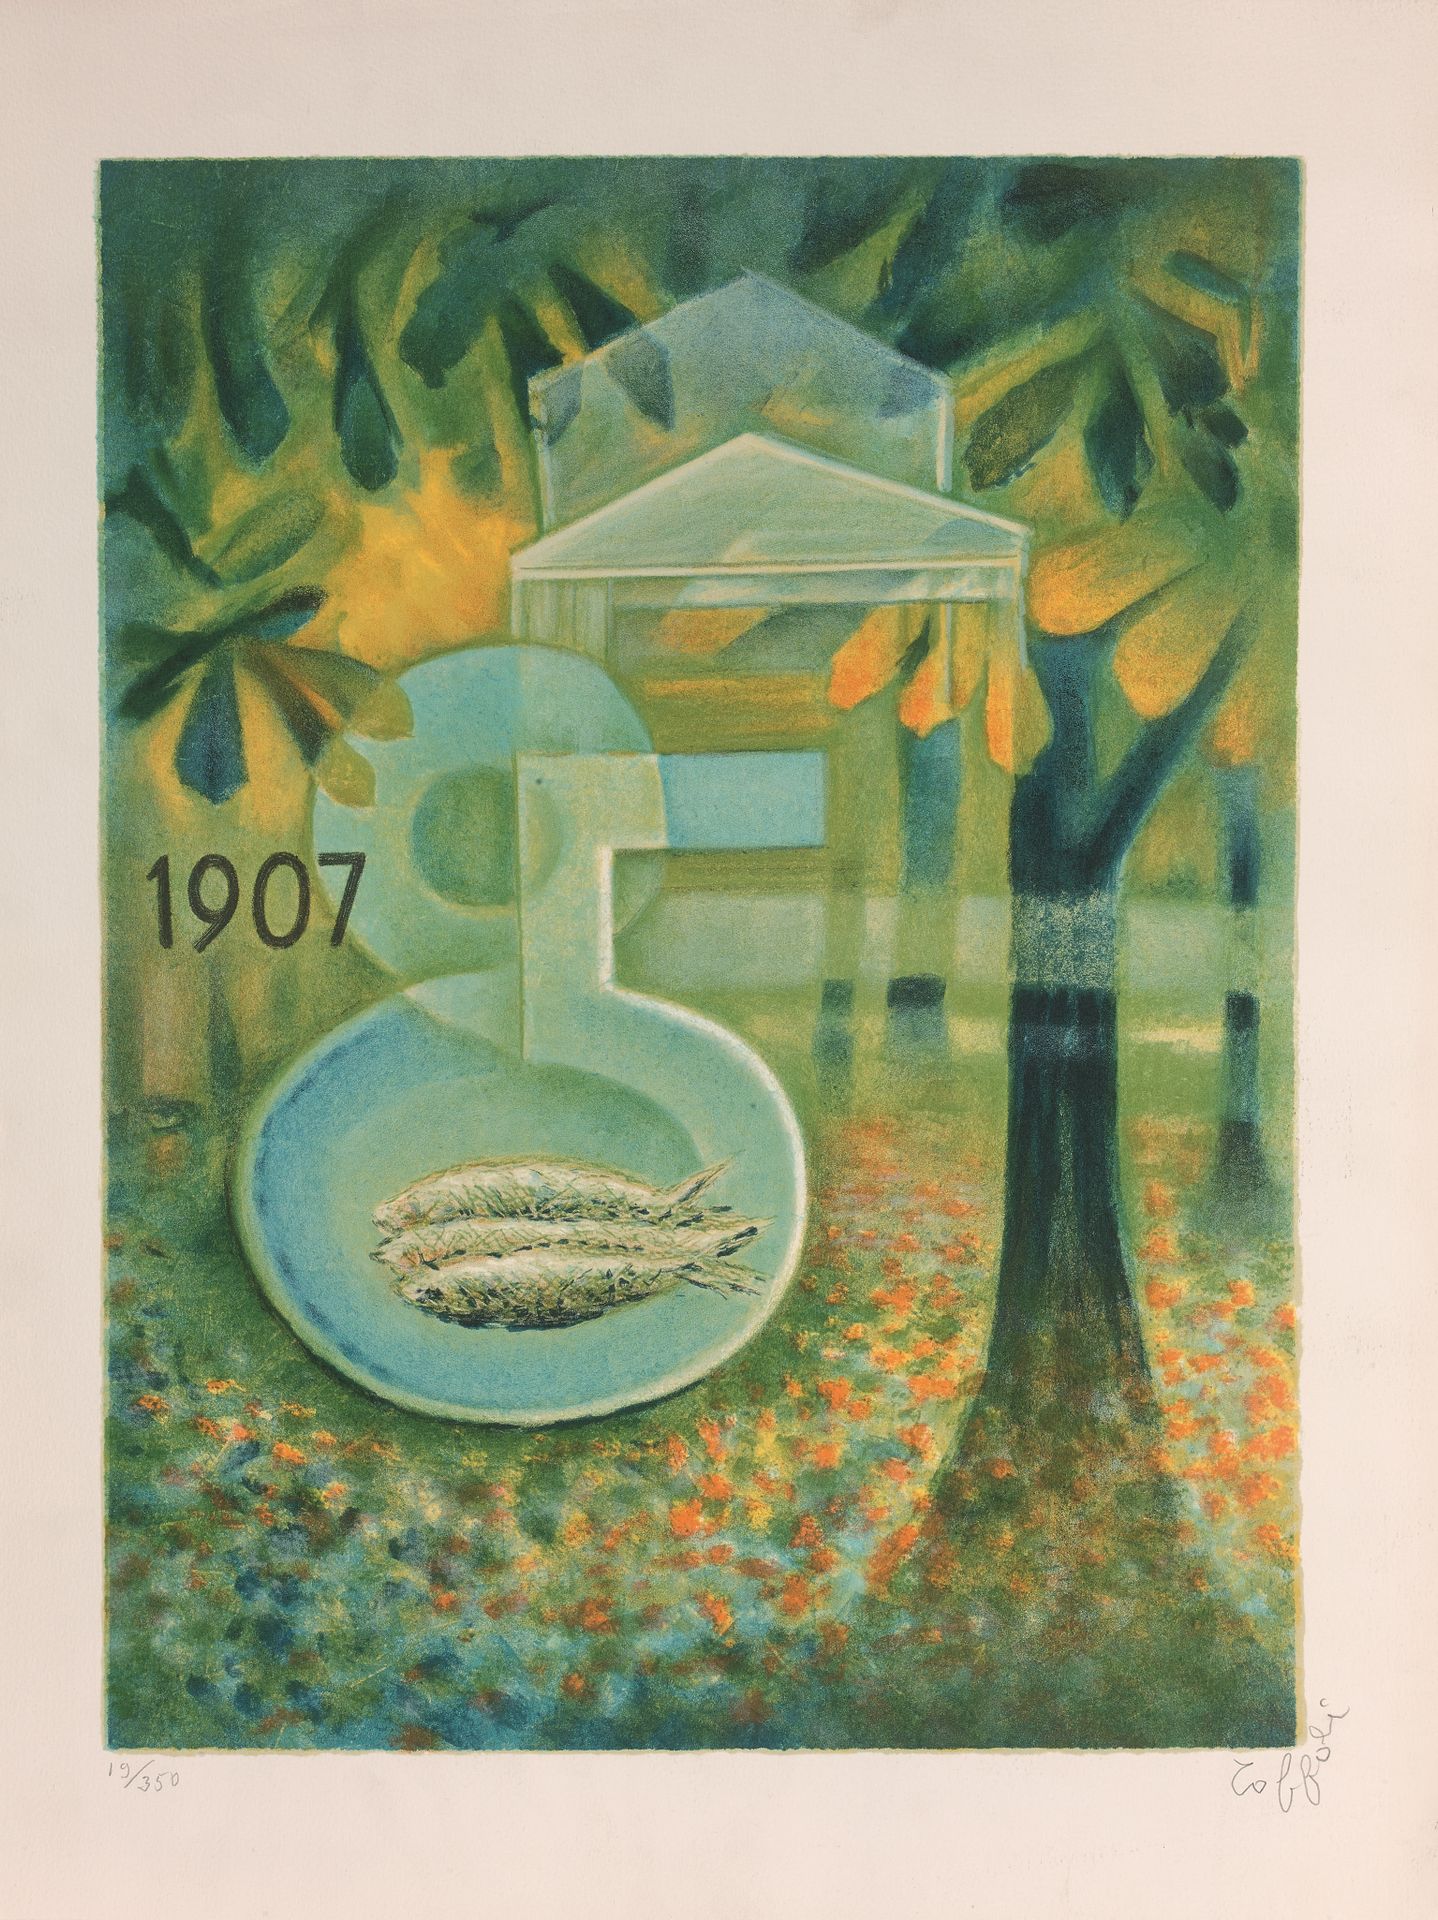 Louis TOFFOLI (1907-1999) 带鱼盘的构图
彩色石版画，右下角有签名，左下角有编号19/350。
版面上有1907年的题字。
65 x 5&hellip;